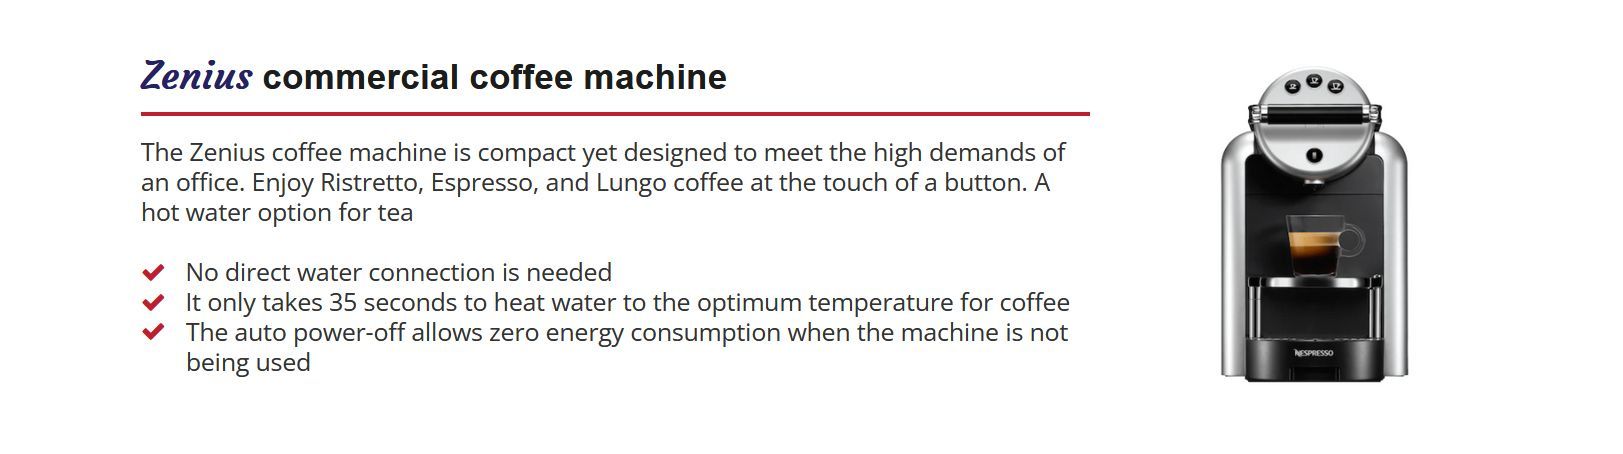 Zenius Commercial Coffee Machine